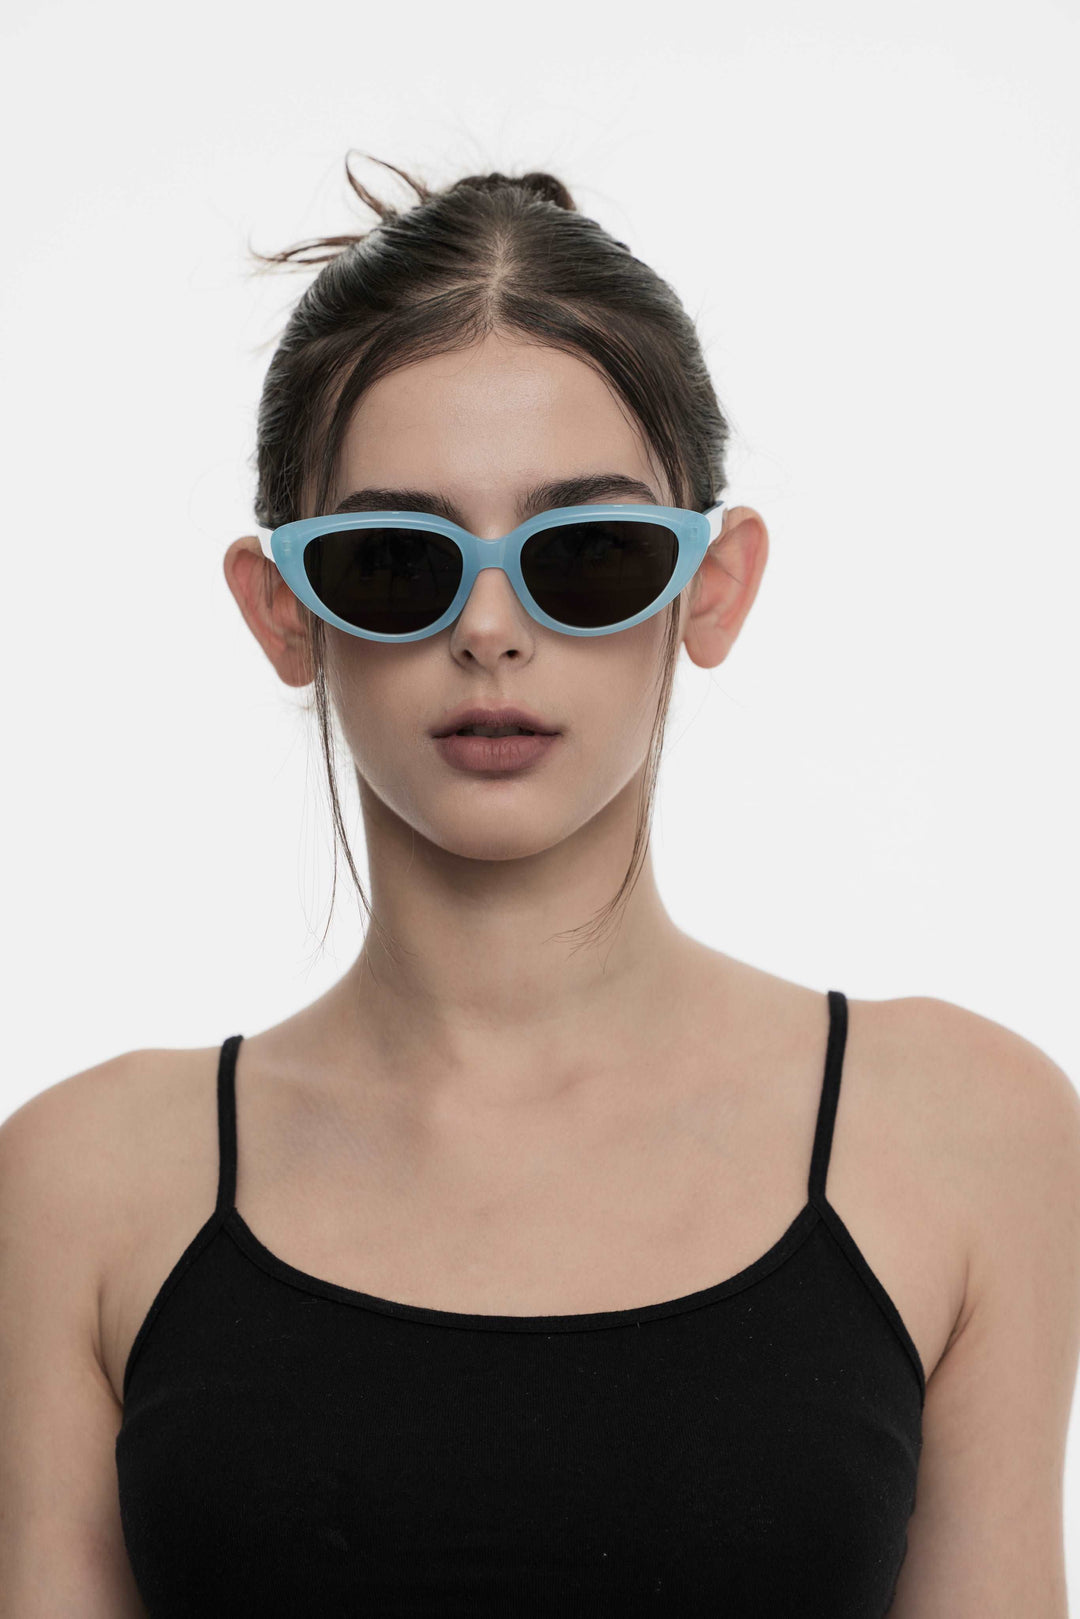 Female Model of her front face wearing BEBE blue Trendy sunglasses from Mercury Retrograde